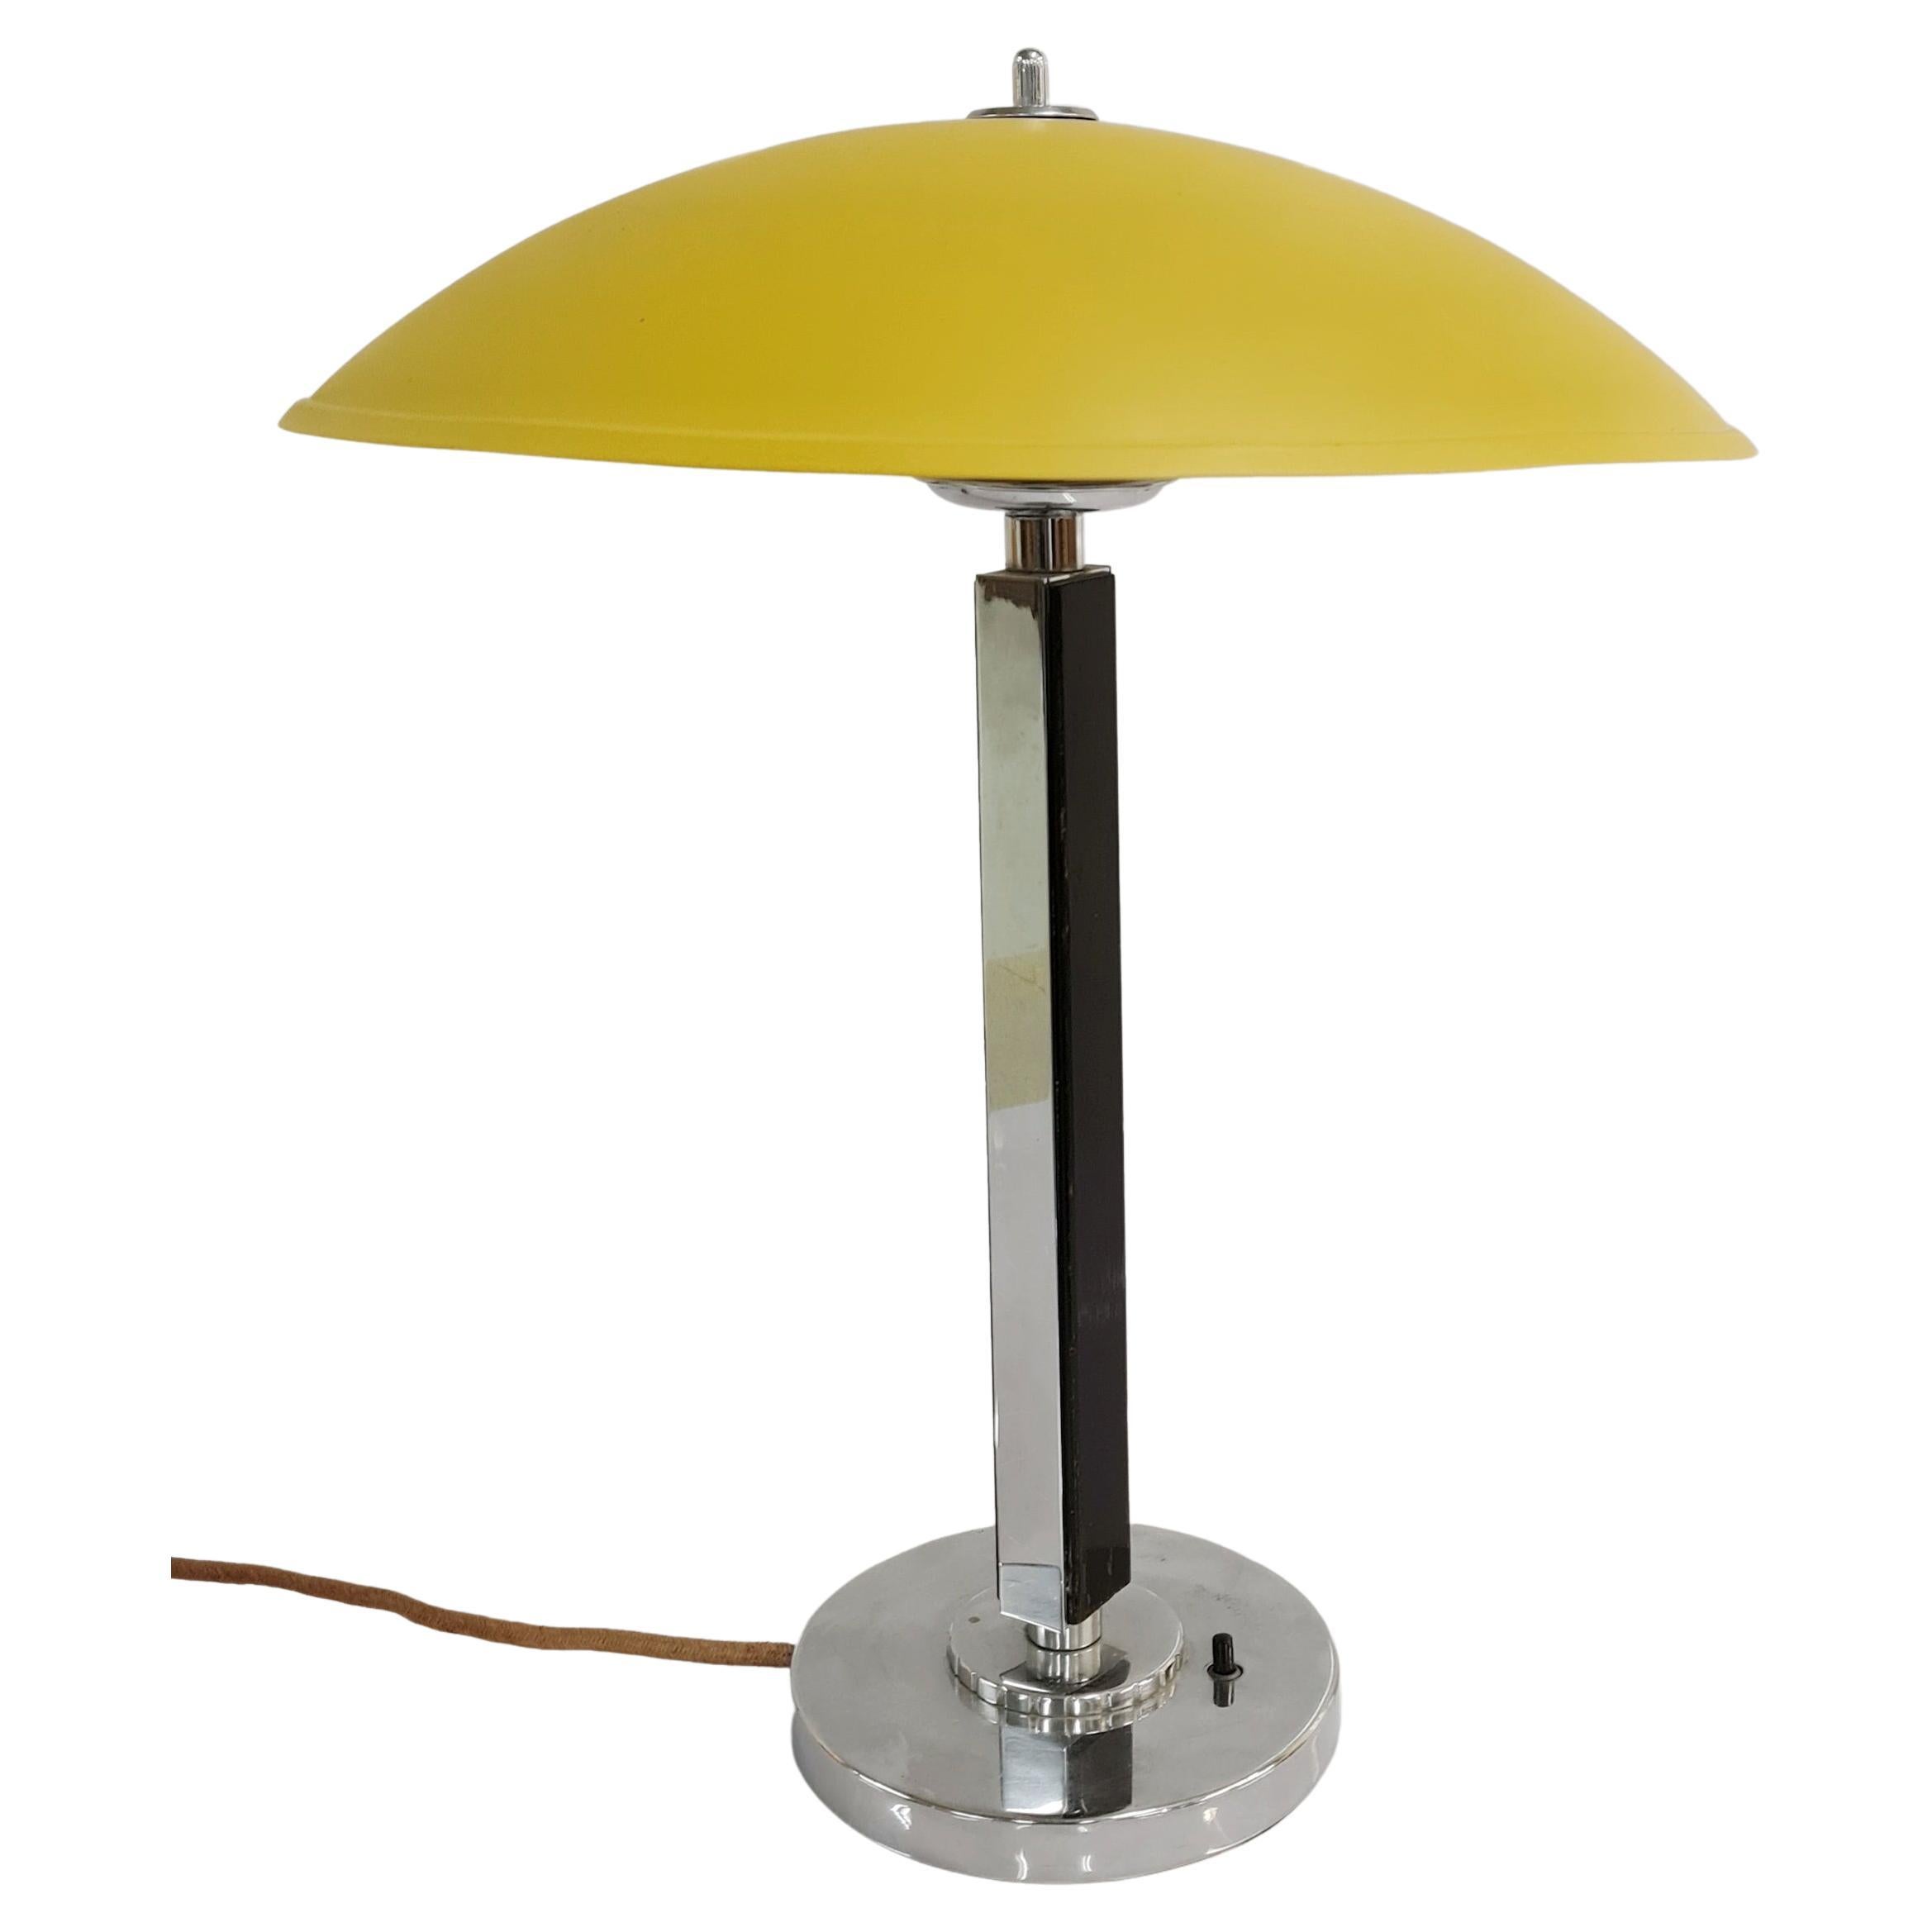 Exceedingly Rare Gunilla Jung Table Lamp Model 2004 for Orno